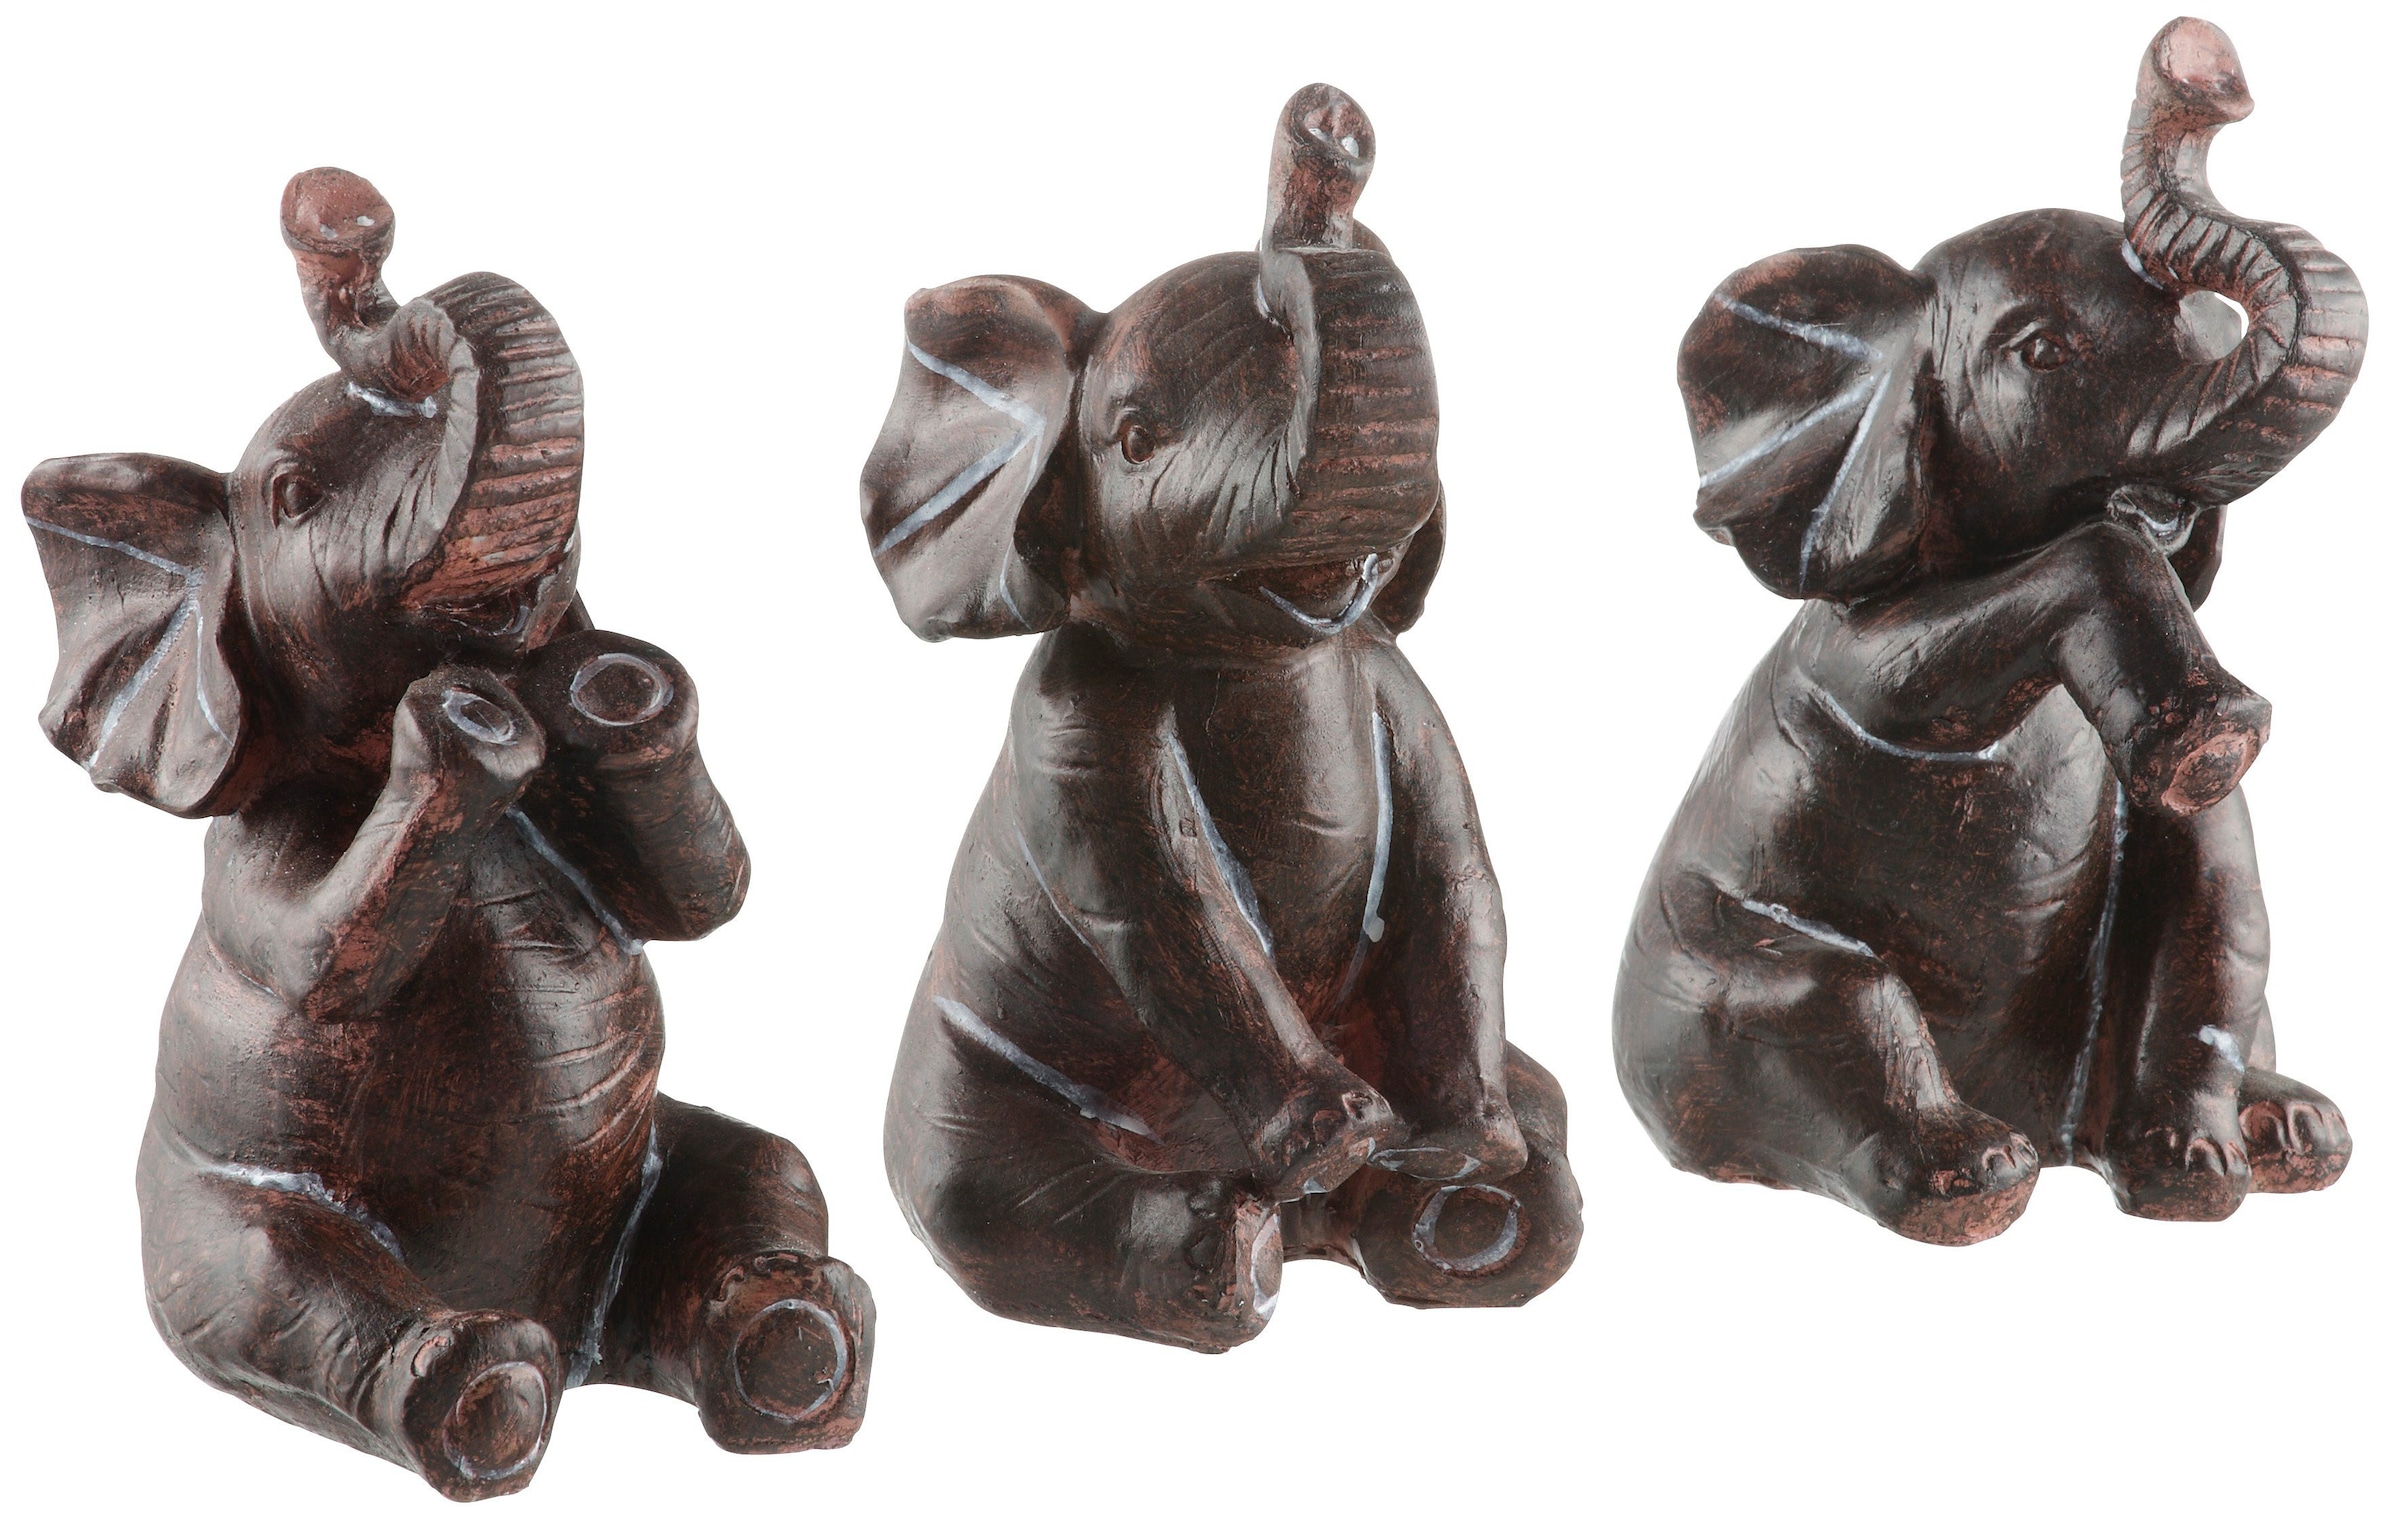 pajoma Tierfigur »Elefanten«, (Set, 3 Raten St.) bestellen auf